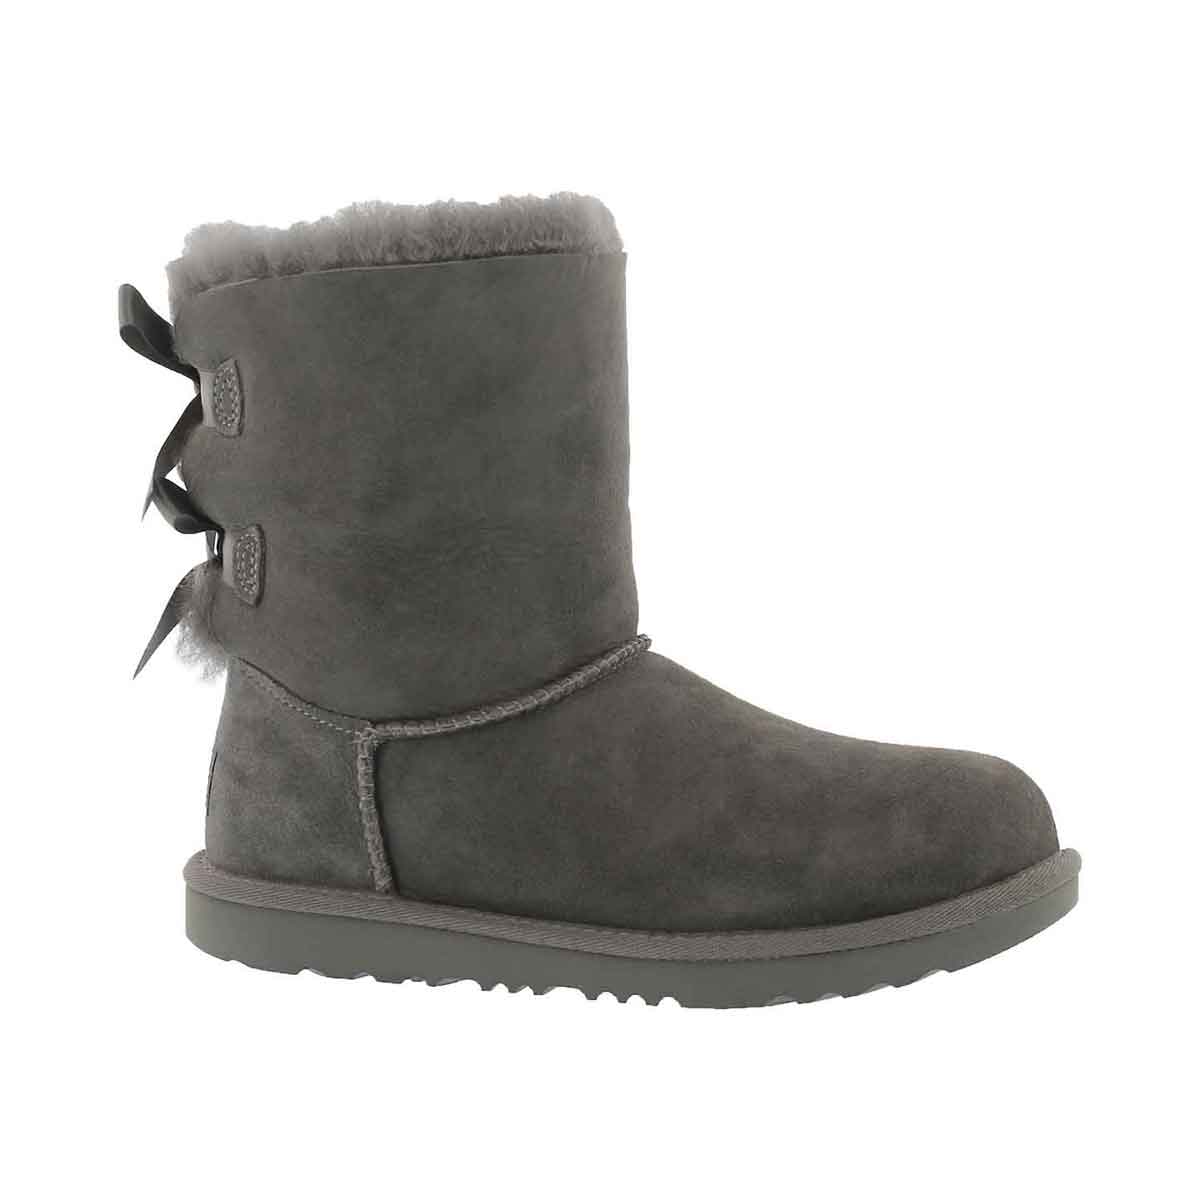 Girls' BAILEY BOW II grey sheepskin boots